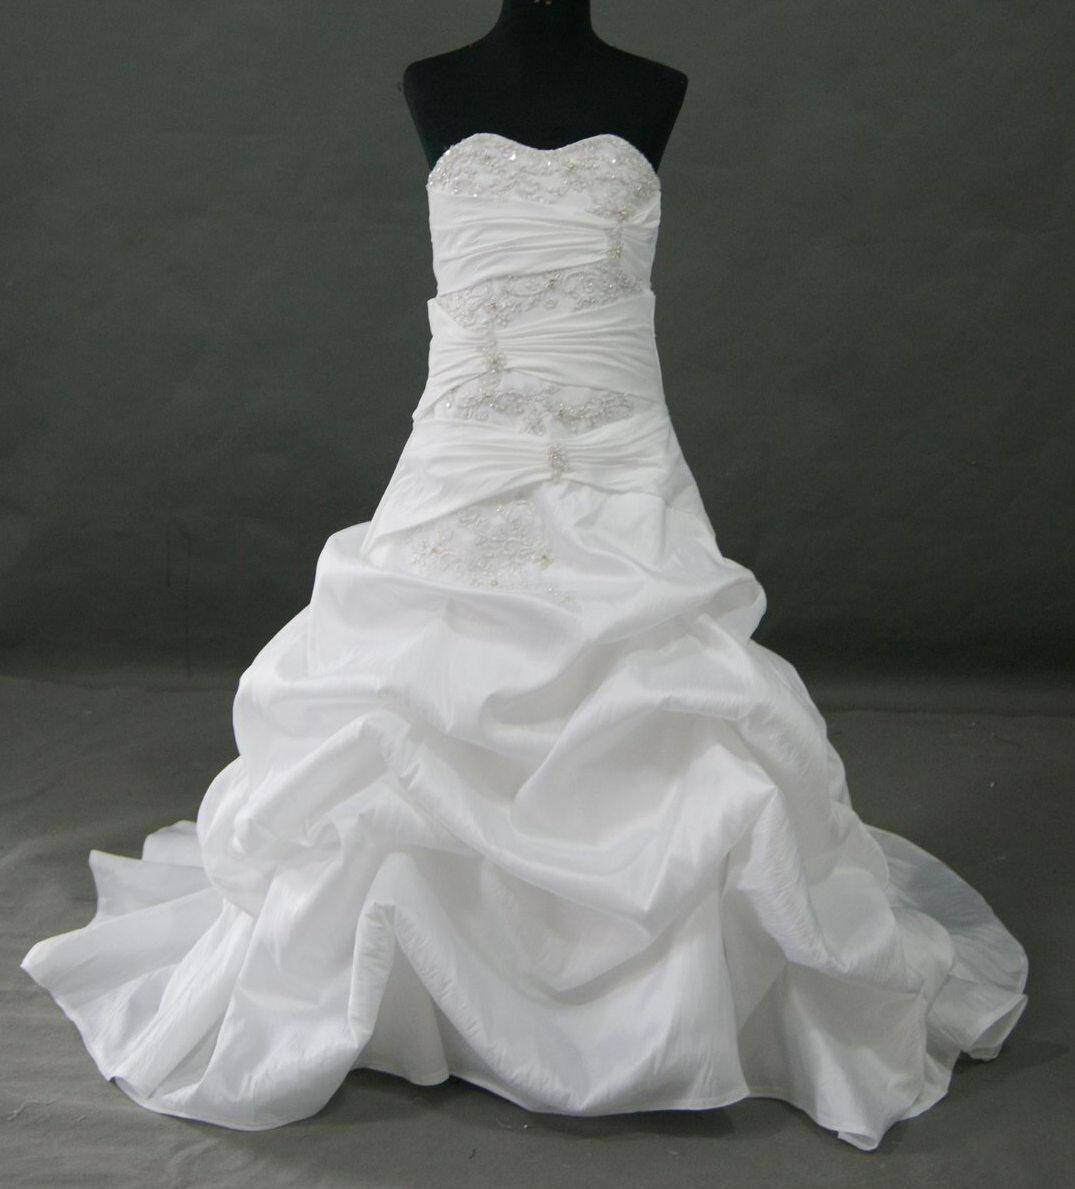 Miniature bride ball gown.